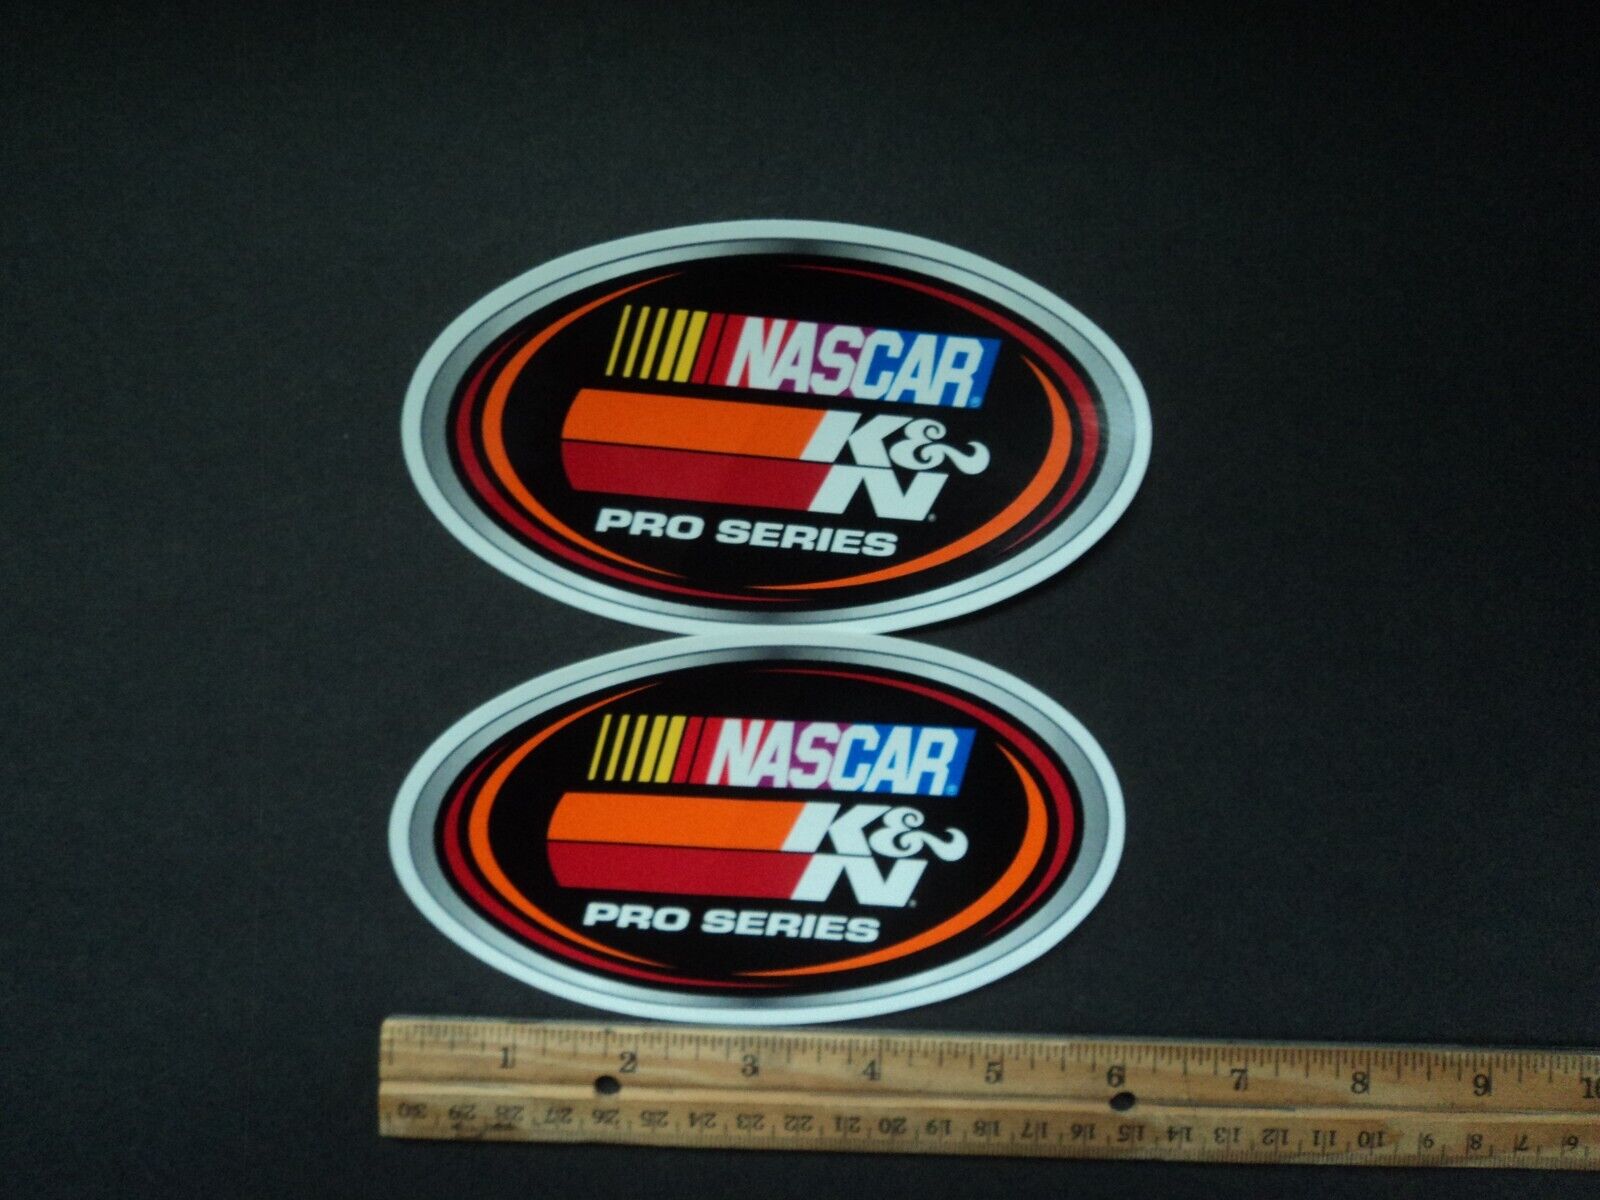 Lot of 2 K&N Pro series NASCAR Racing Decals Stickers Original 6\